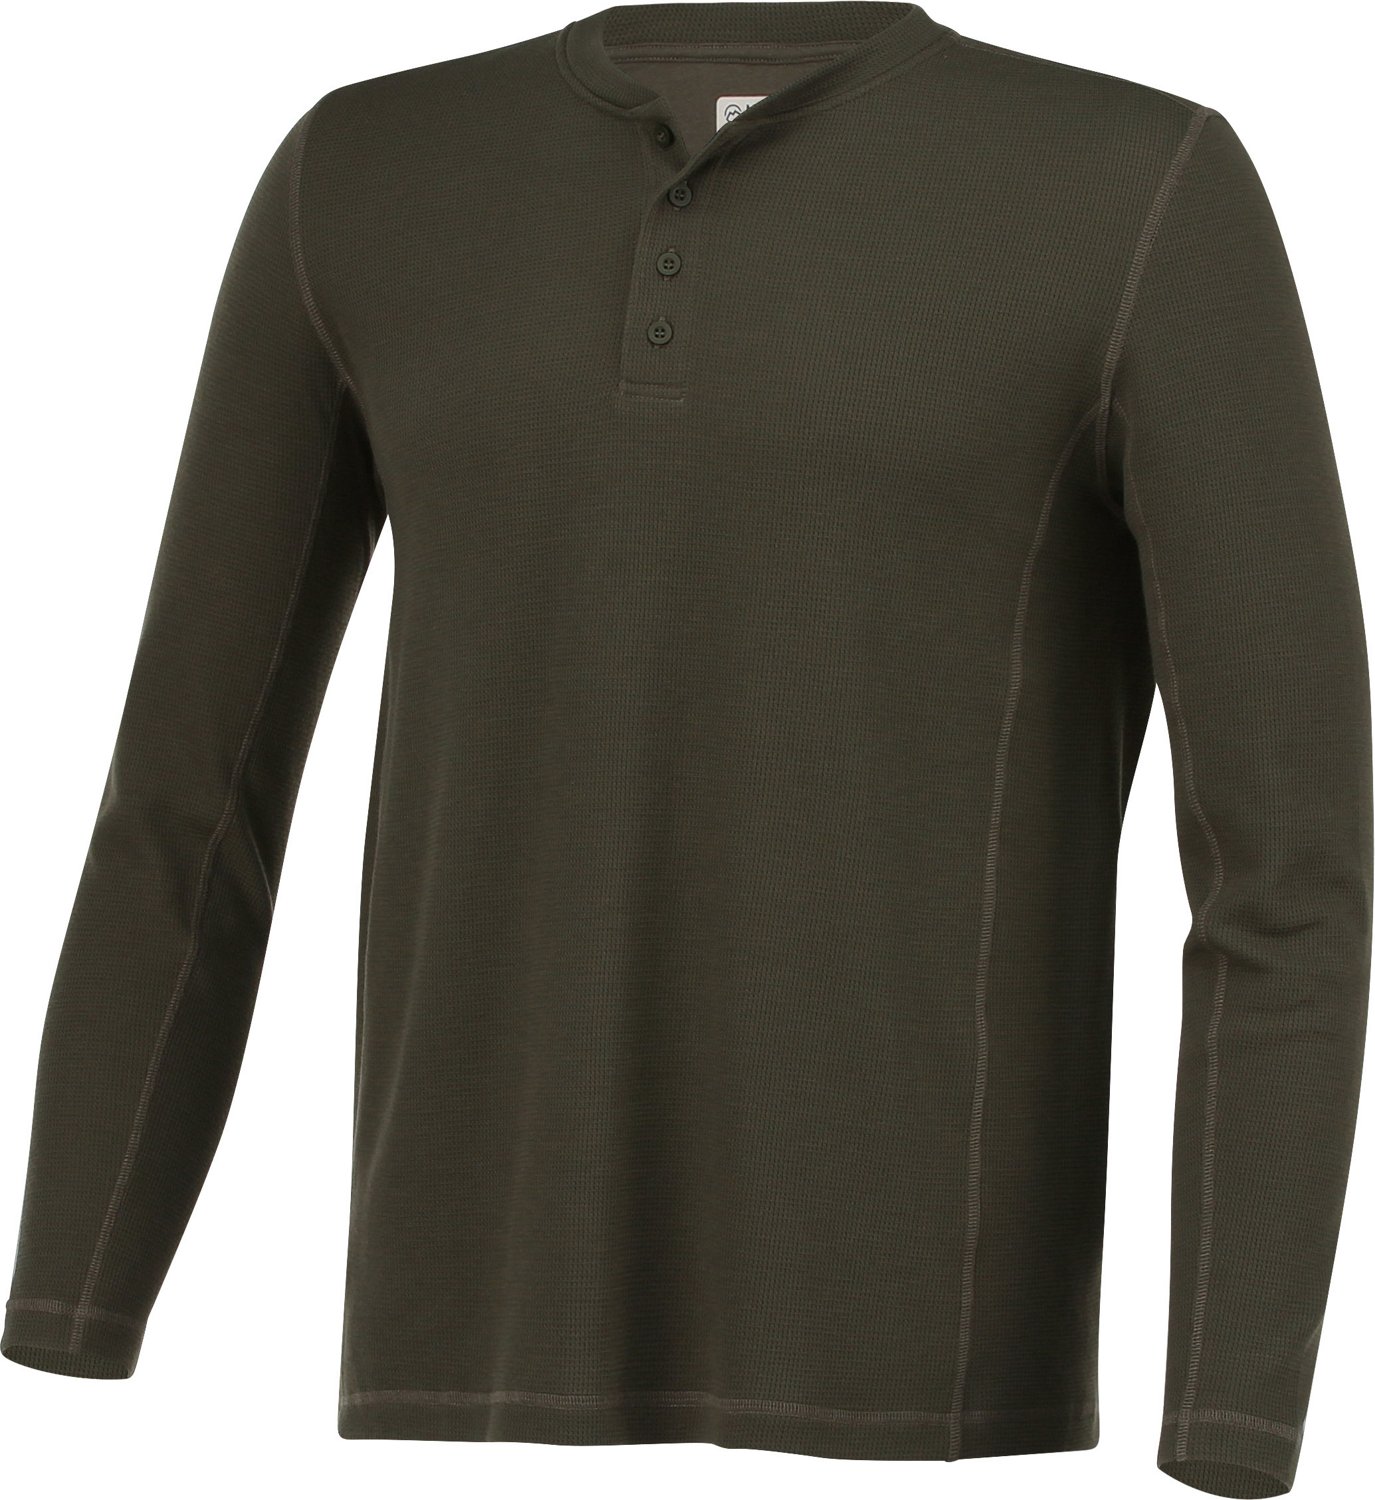 The Thermal Henley in Grey – Manresa Clothing LLC